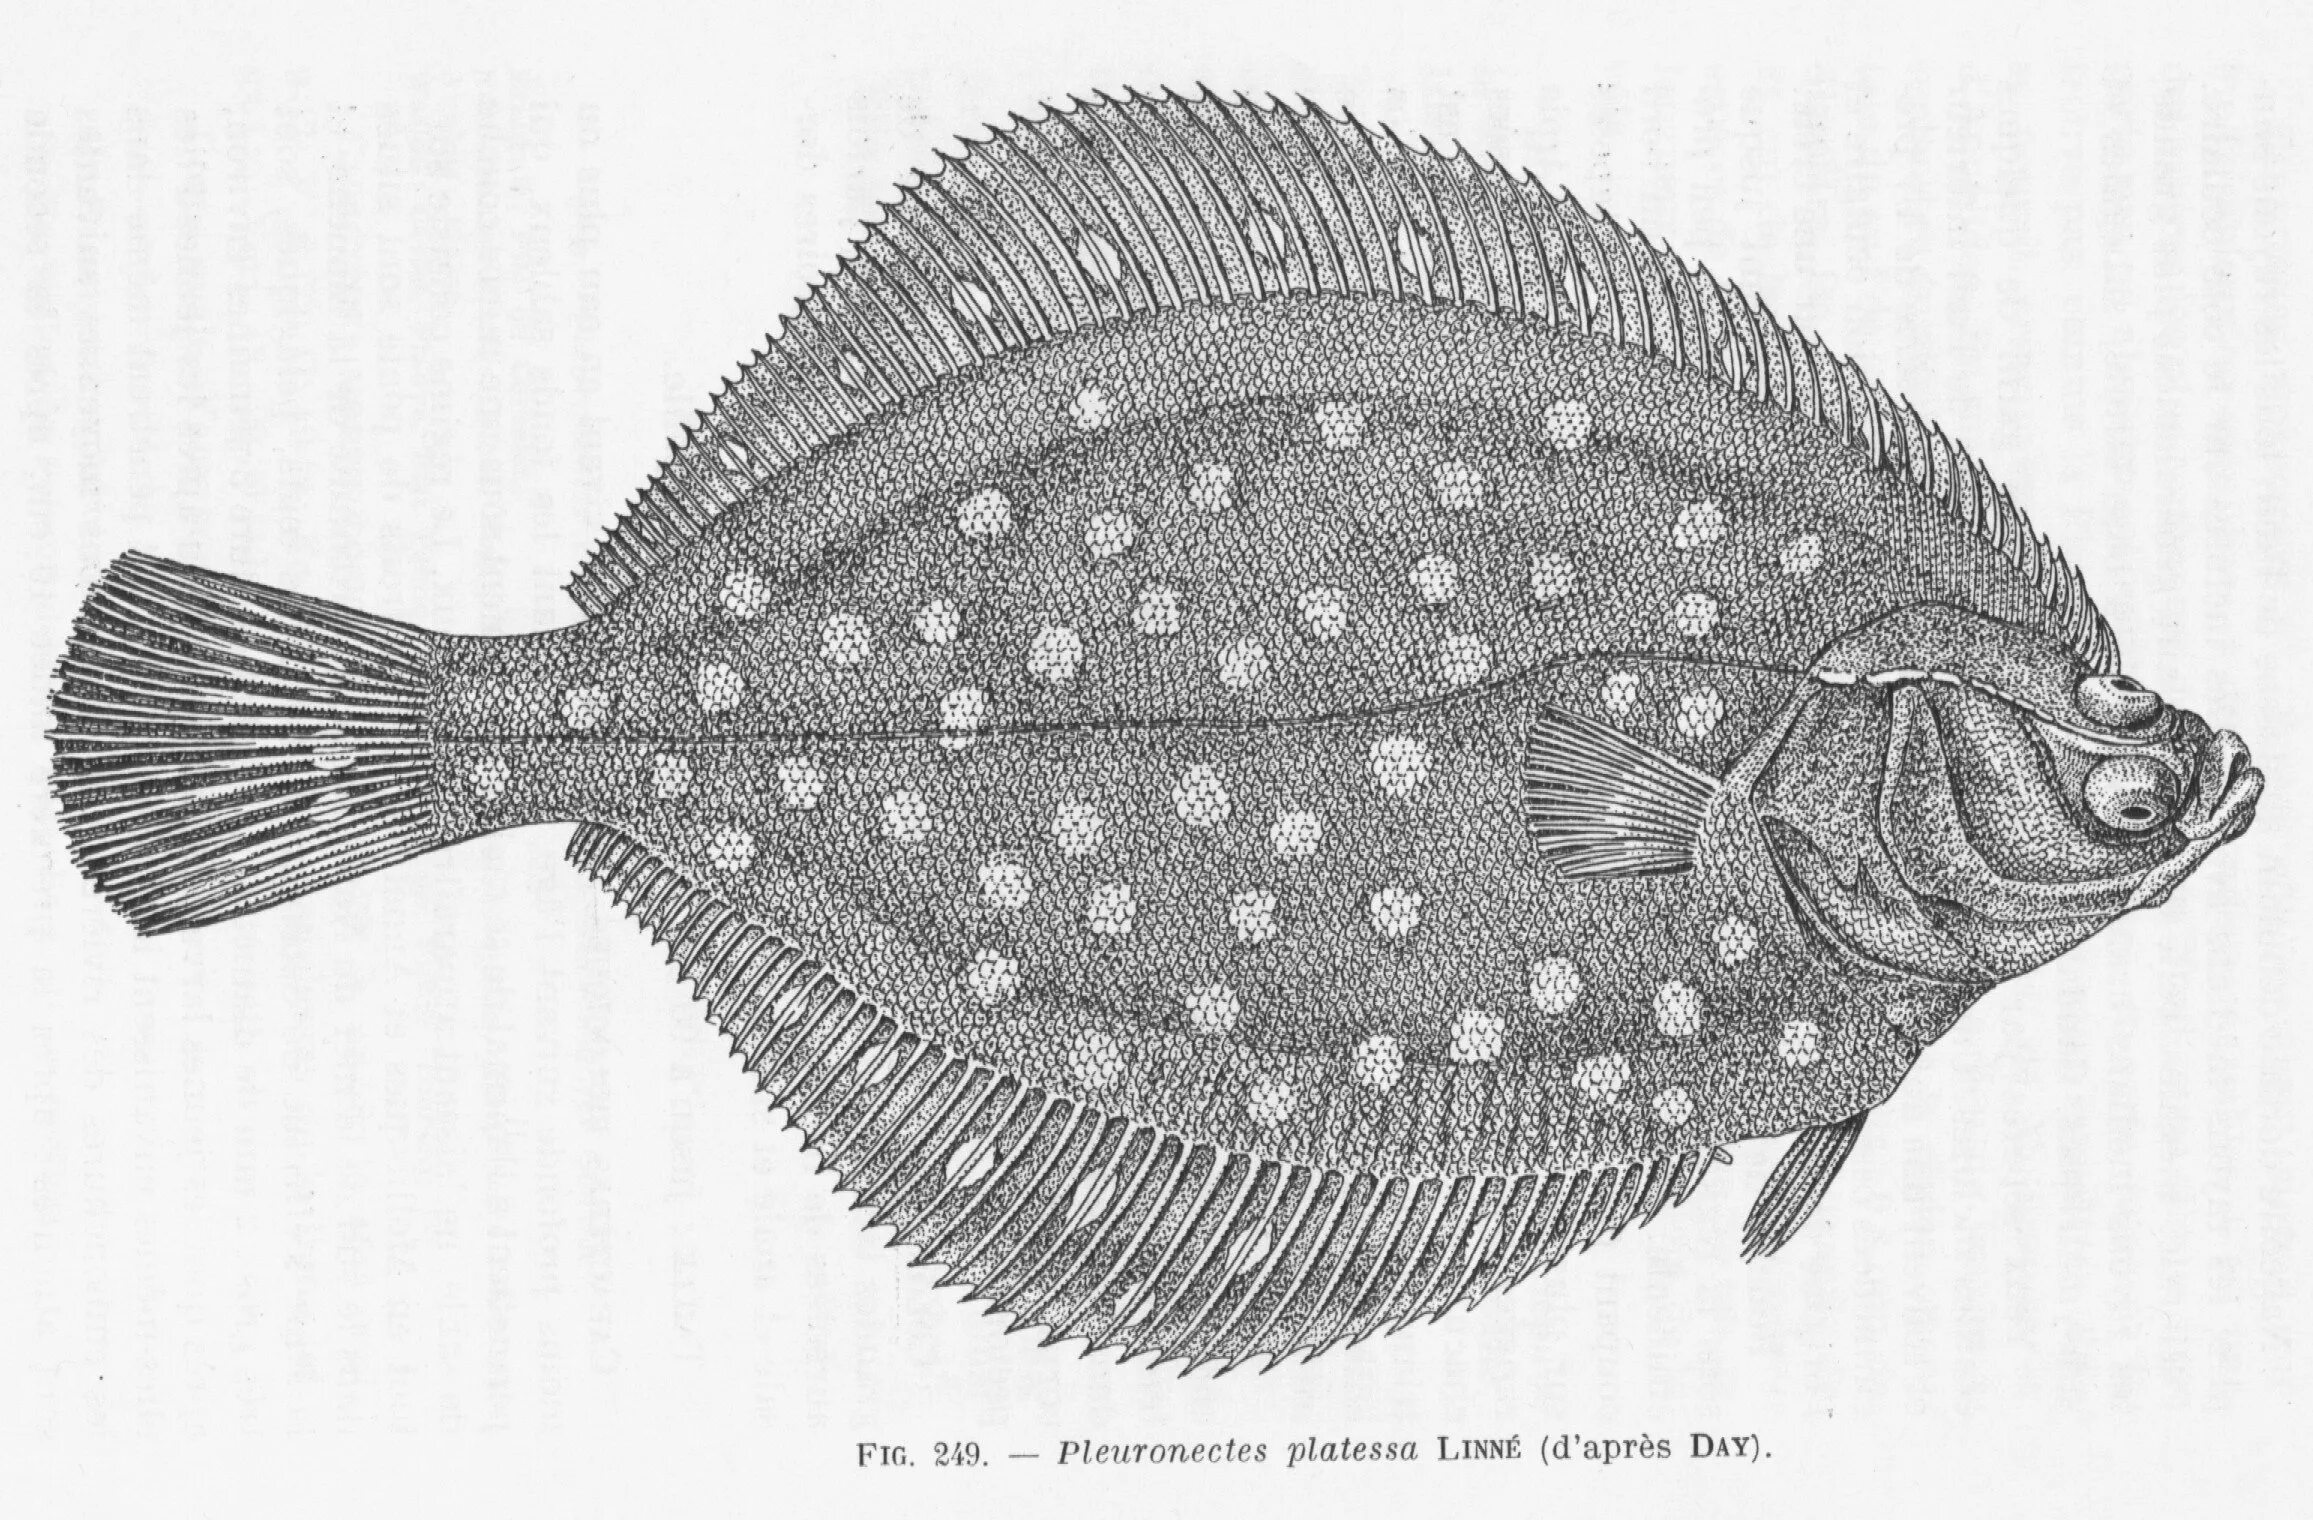 Укажите тип симметрии животного рыба. Камбала pleuronectes platessa. Морская камбала (pleuronectes platessa). Камбала тюрбо. Остроголовая камбала.